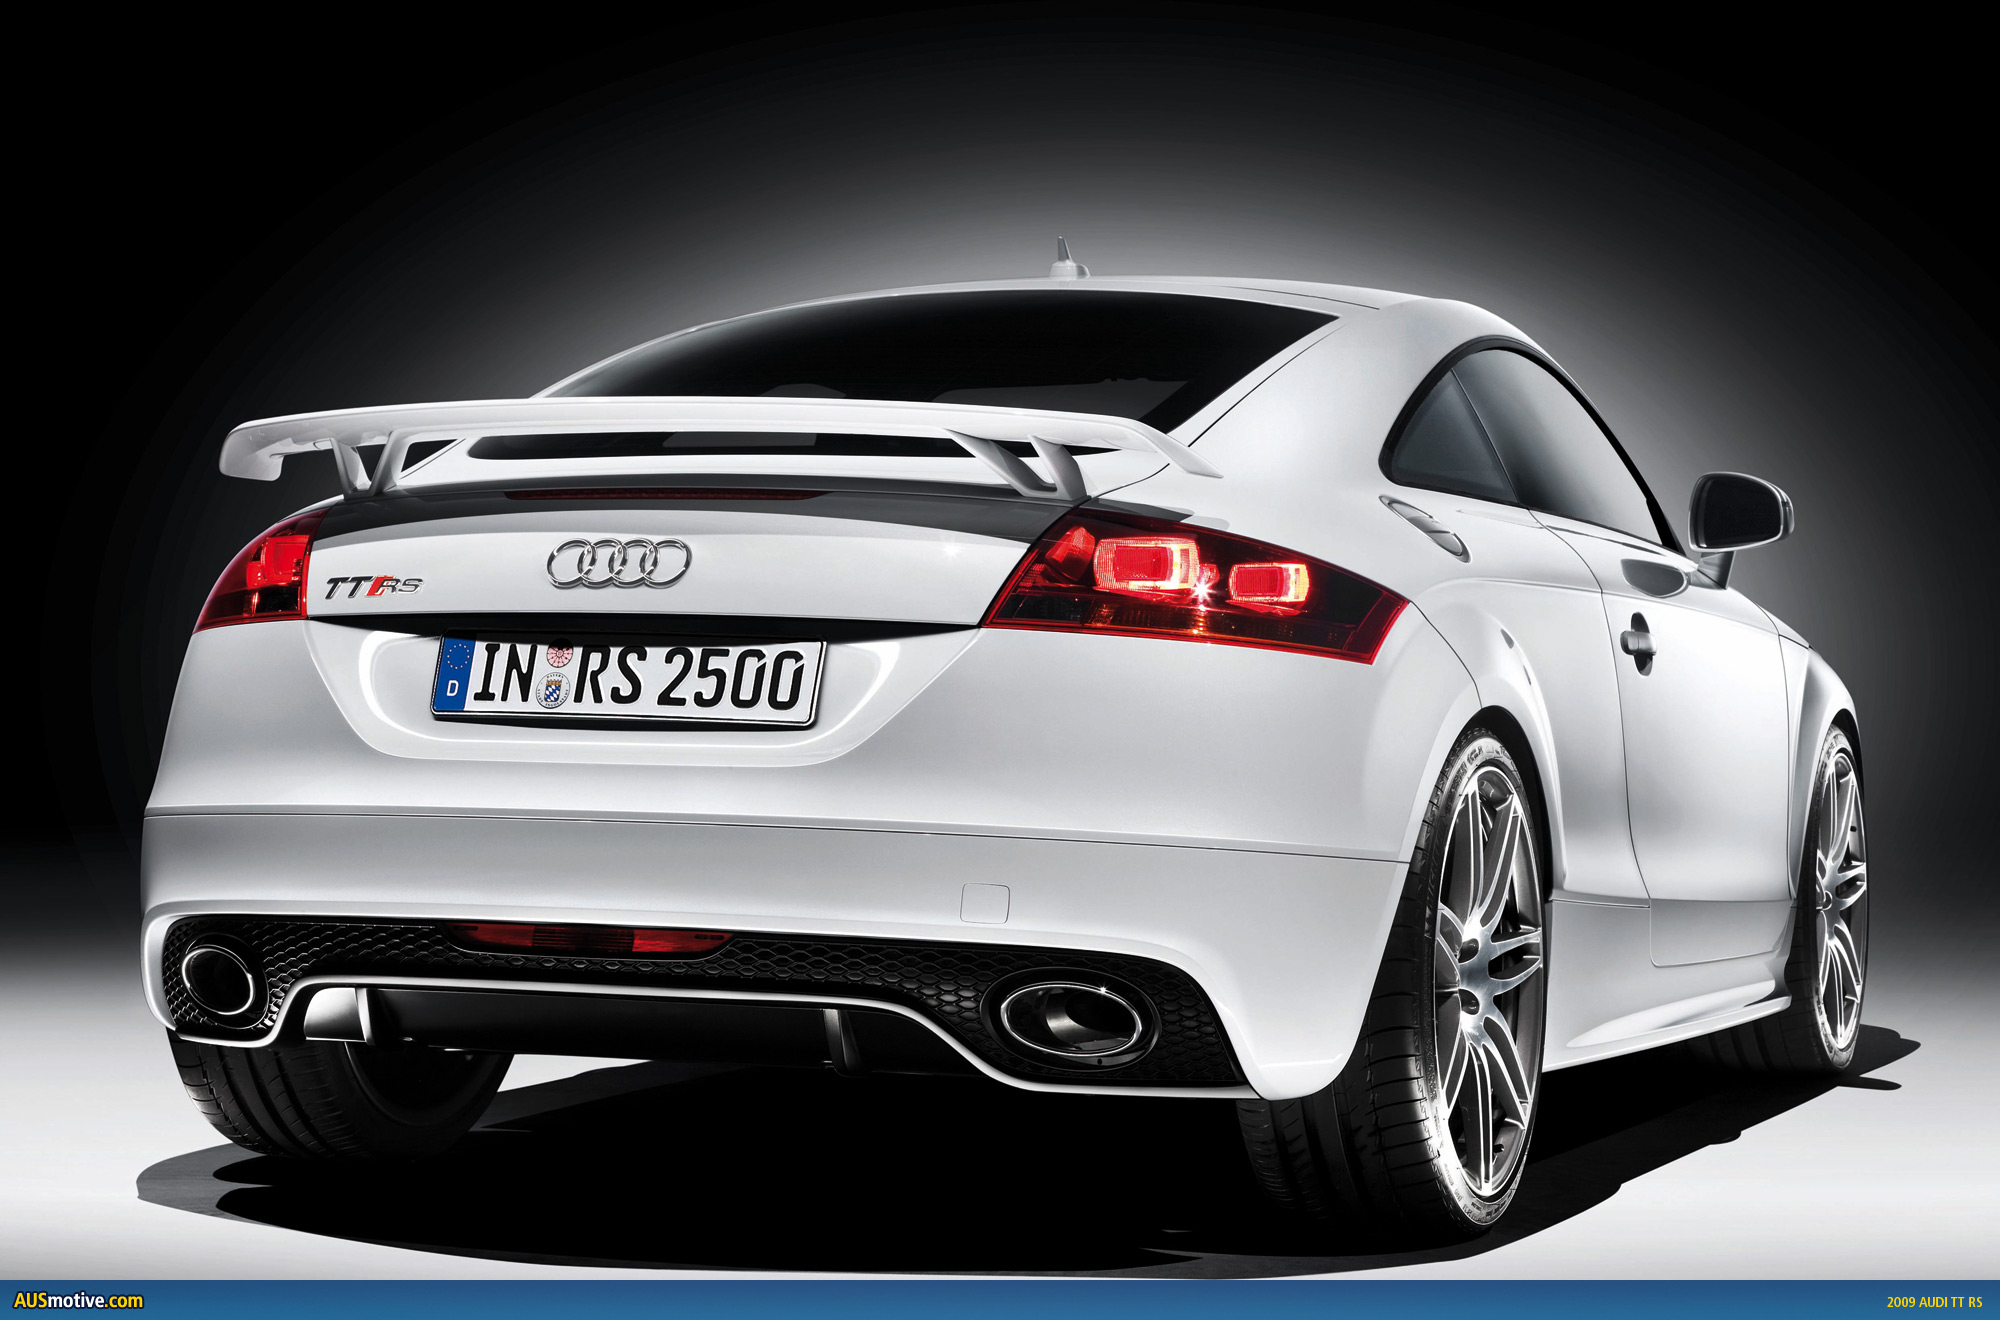 AUSmotive.com » Audi TT RS image gallery